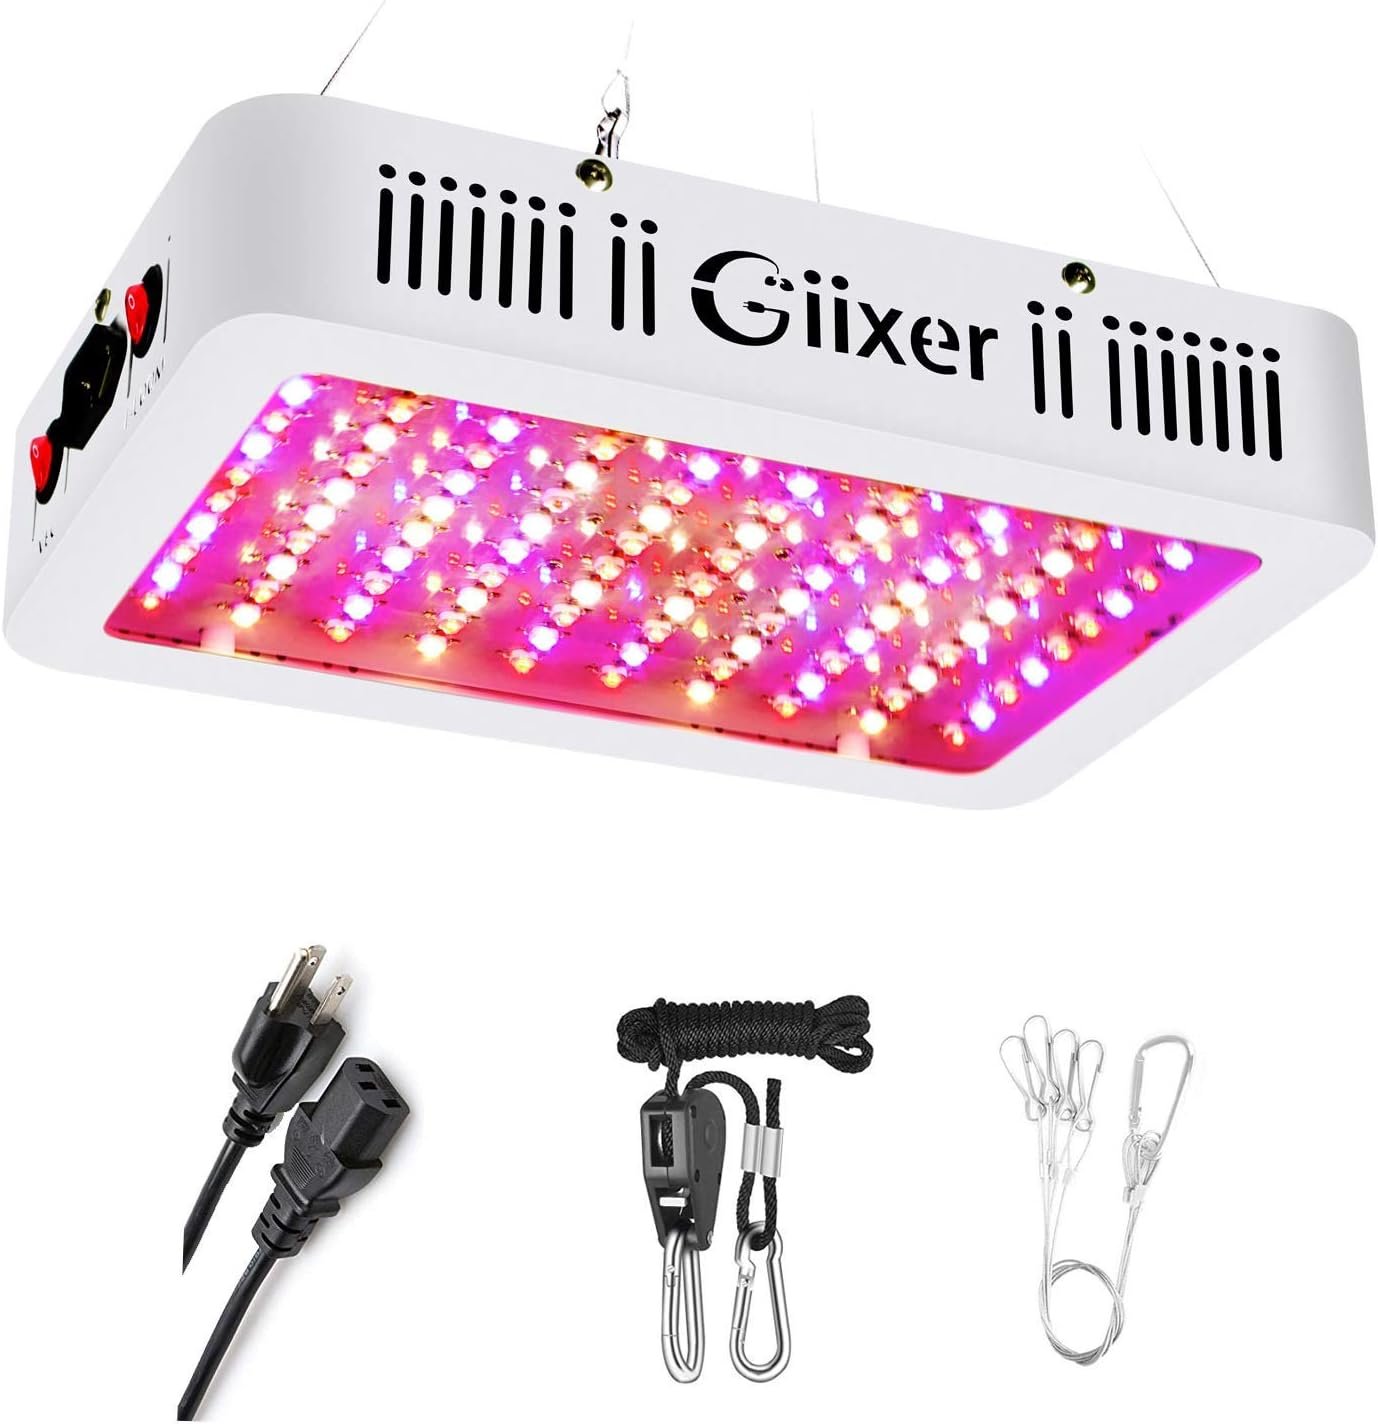 giixer 1000w led grow light review